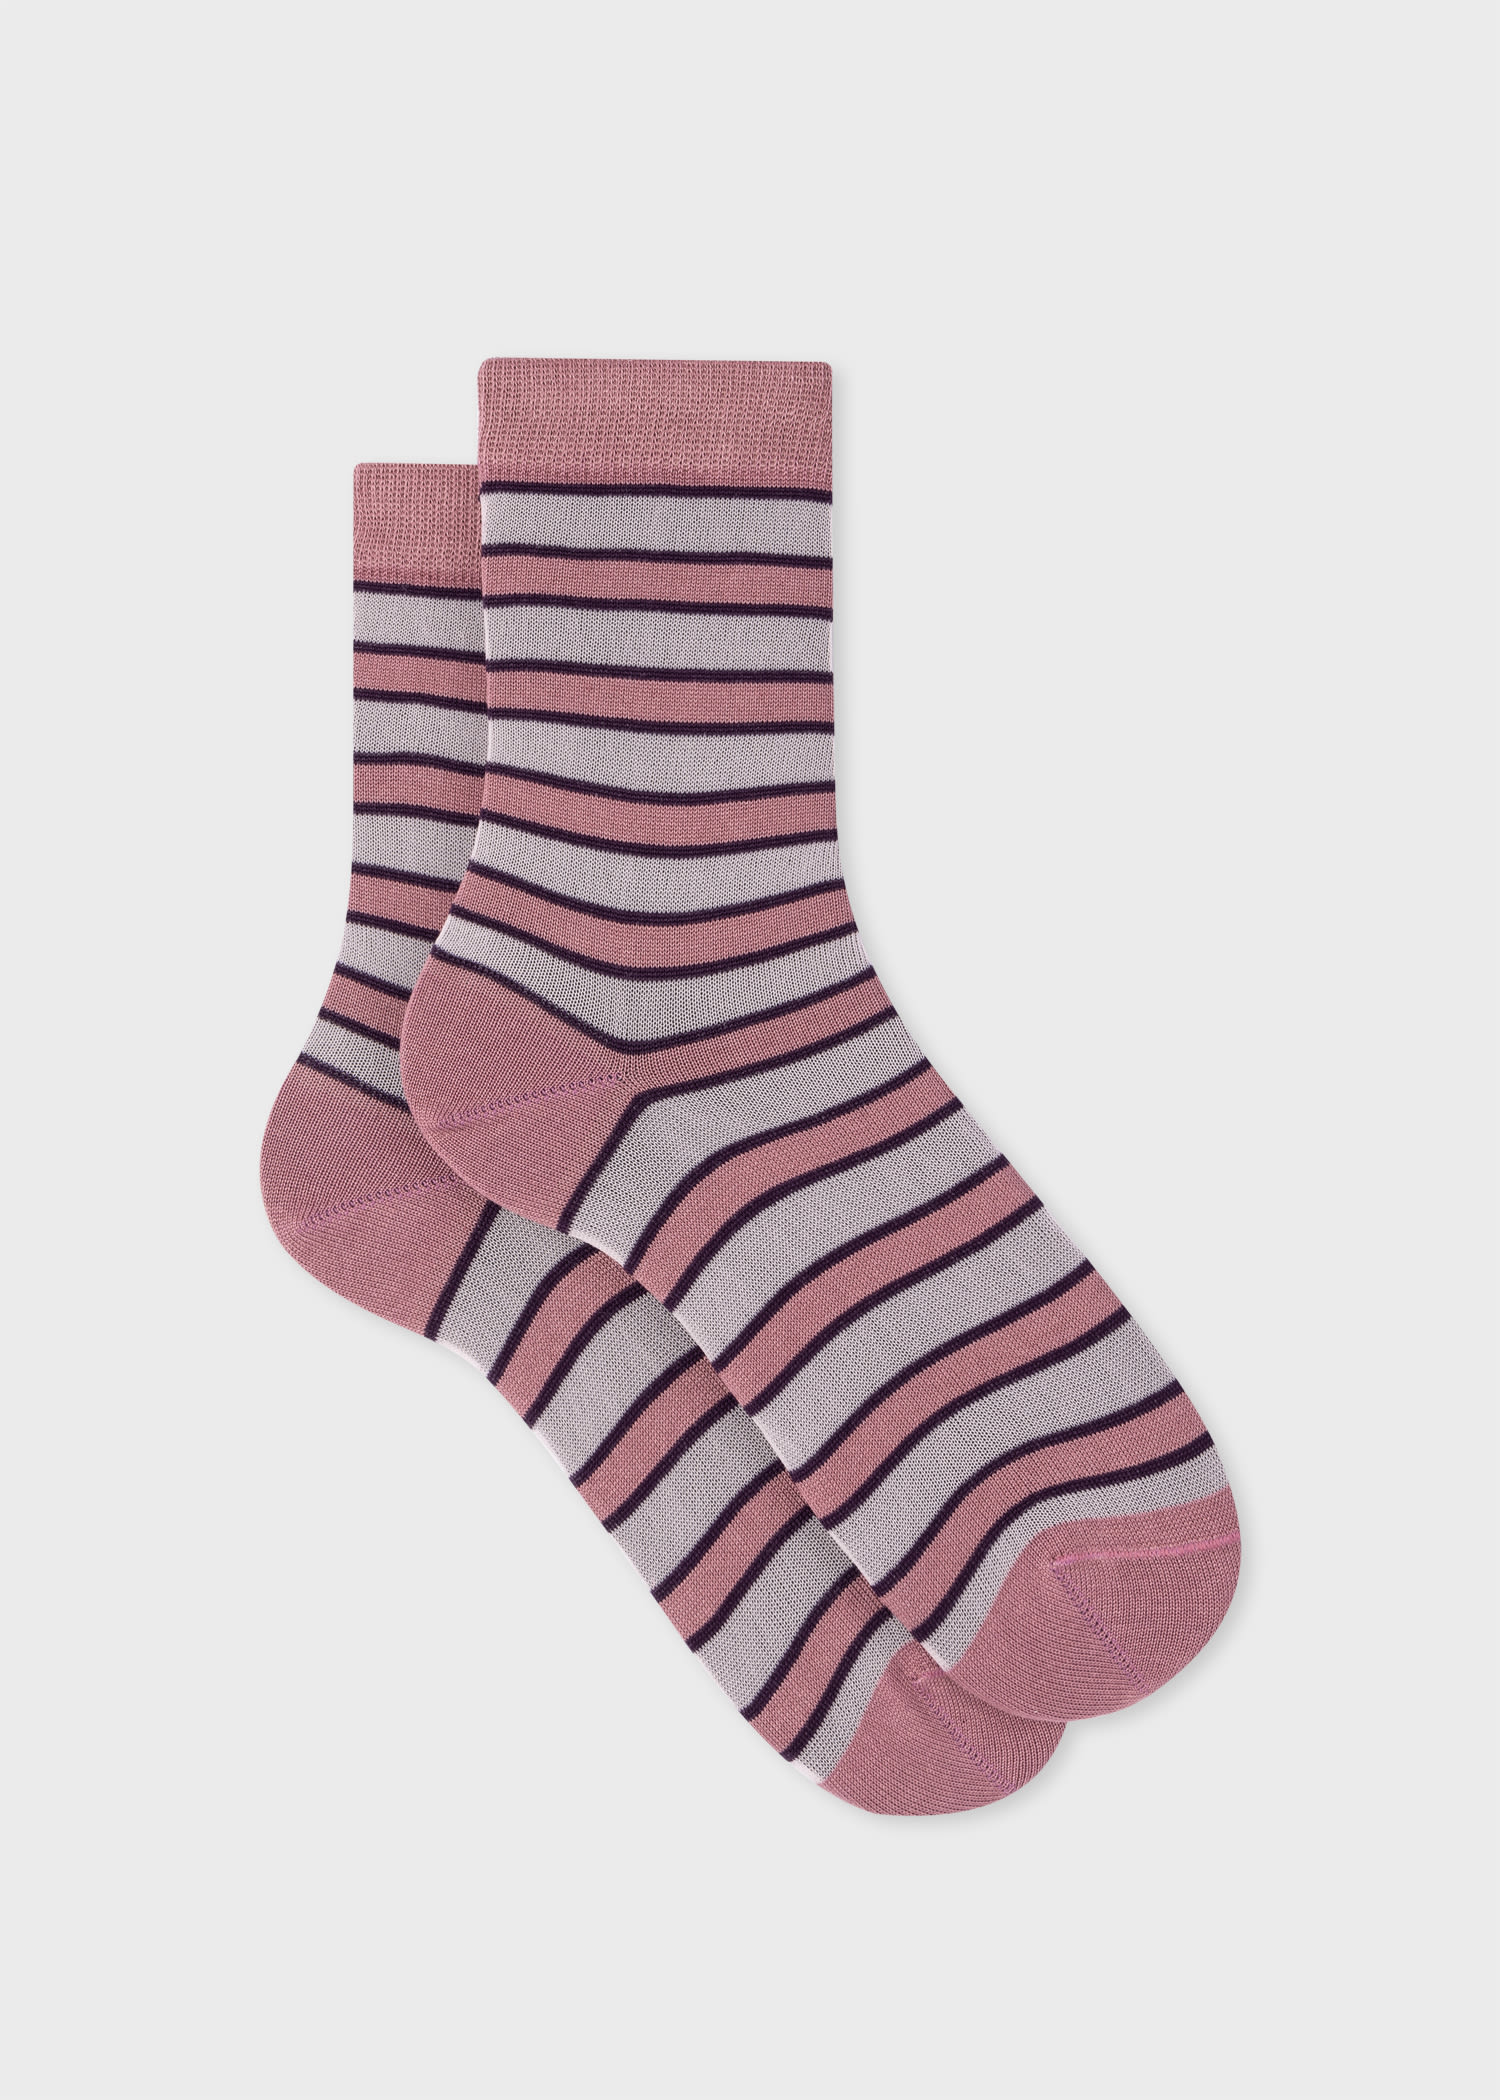 Paul Smith Women's Mauve Stripe Socks Purple